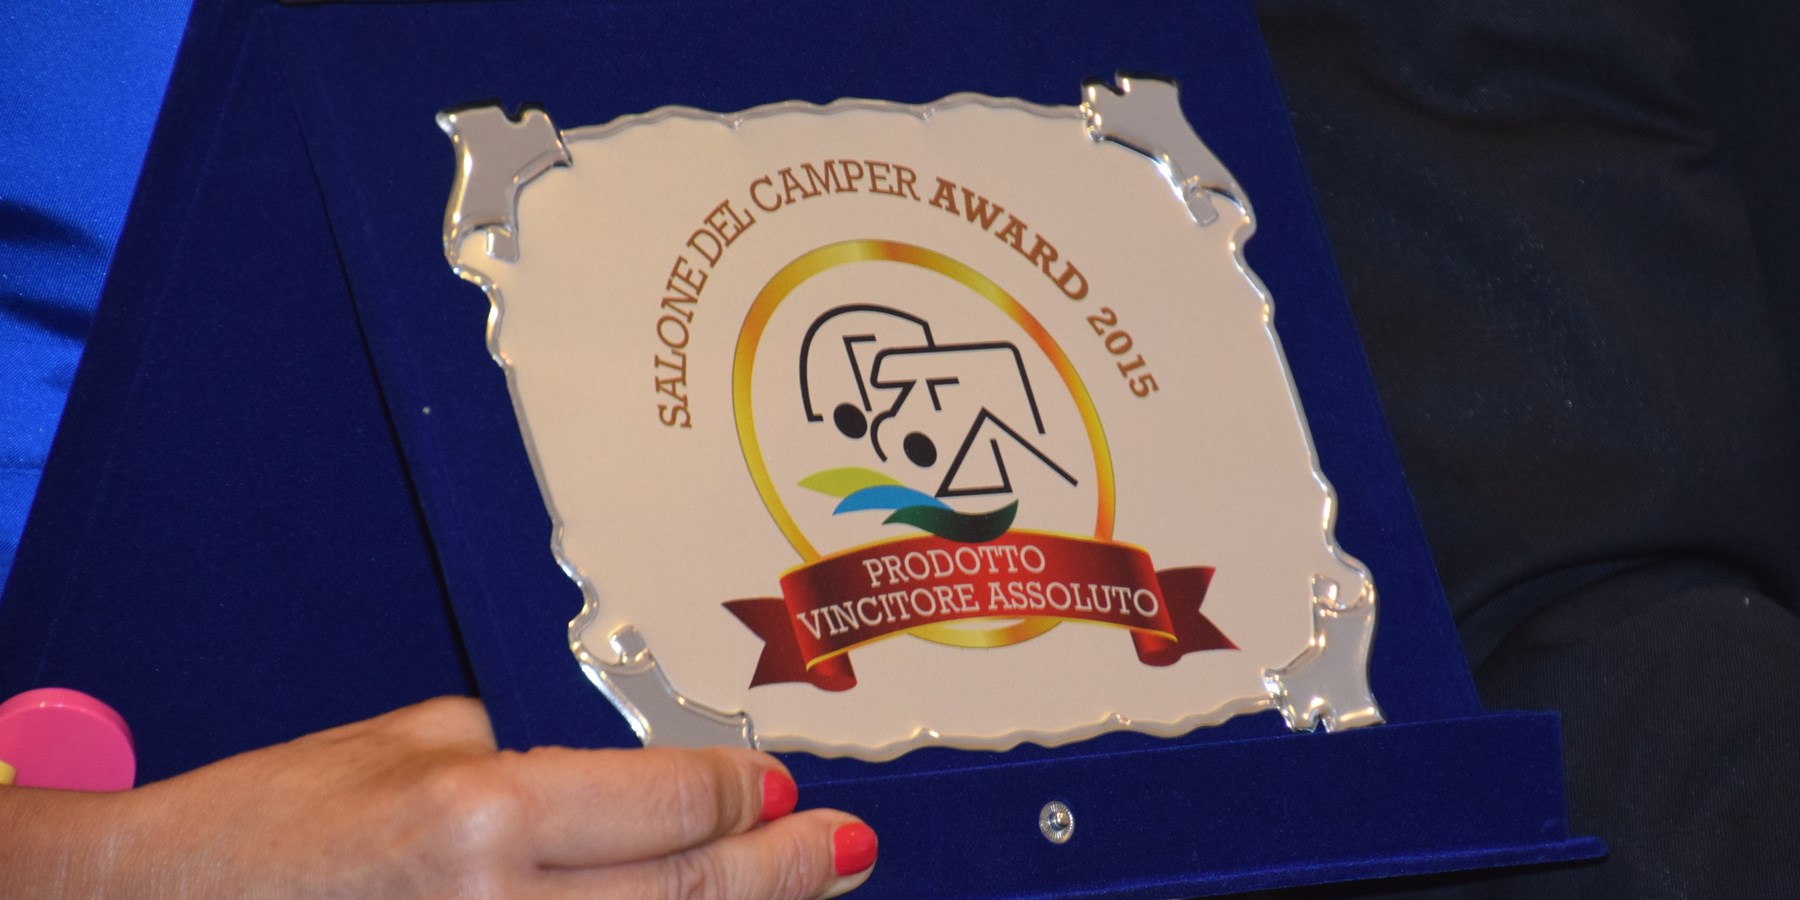 Roller Team Gewinner des Salone del Camper-Award 2015